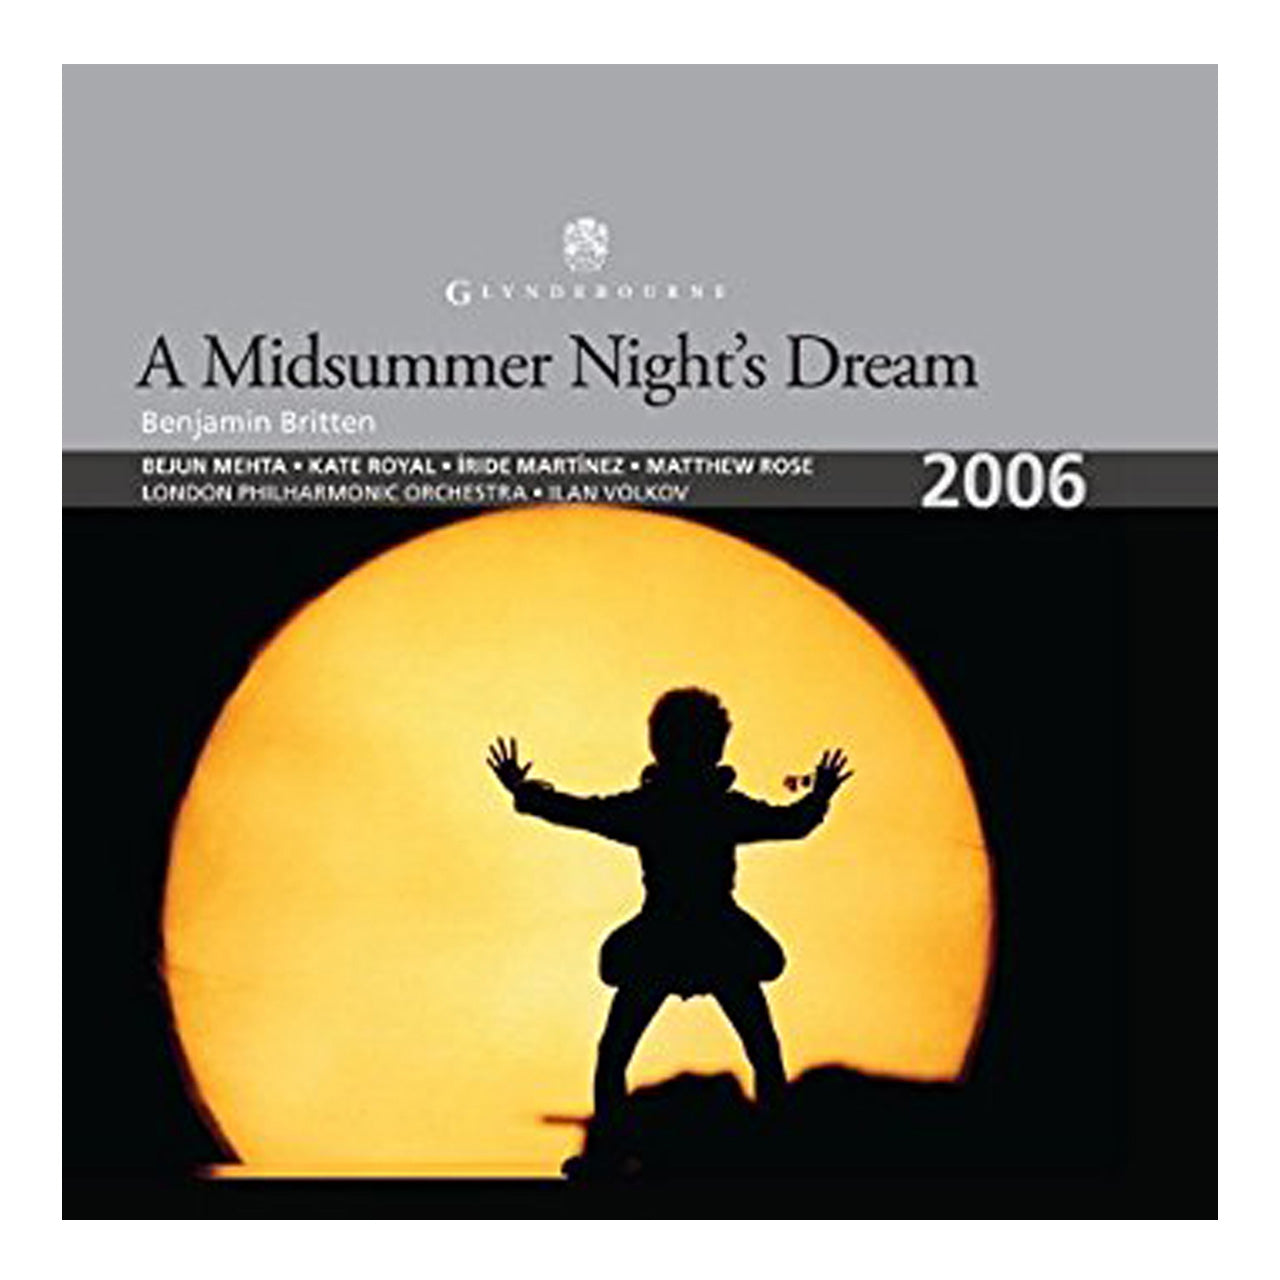 A Midsummer Night's Dream CD 2006 Glyndebourne Shop